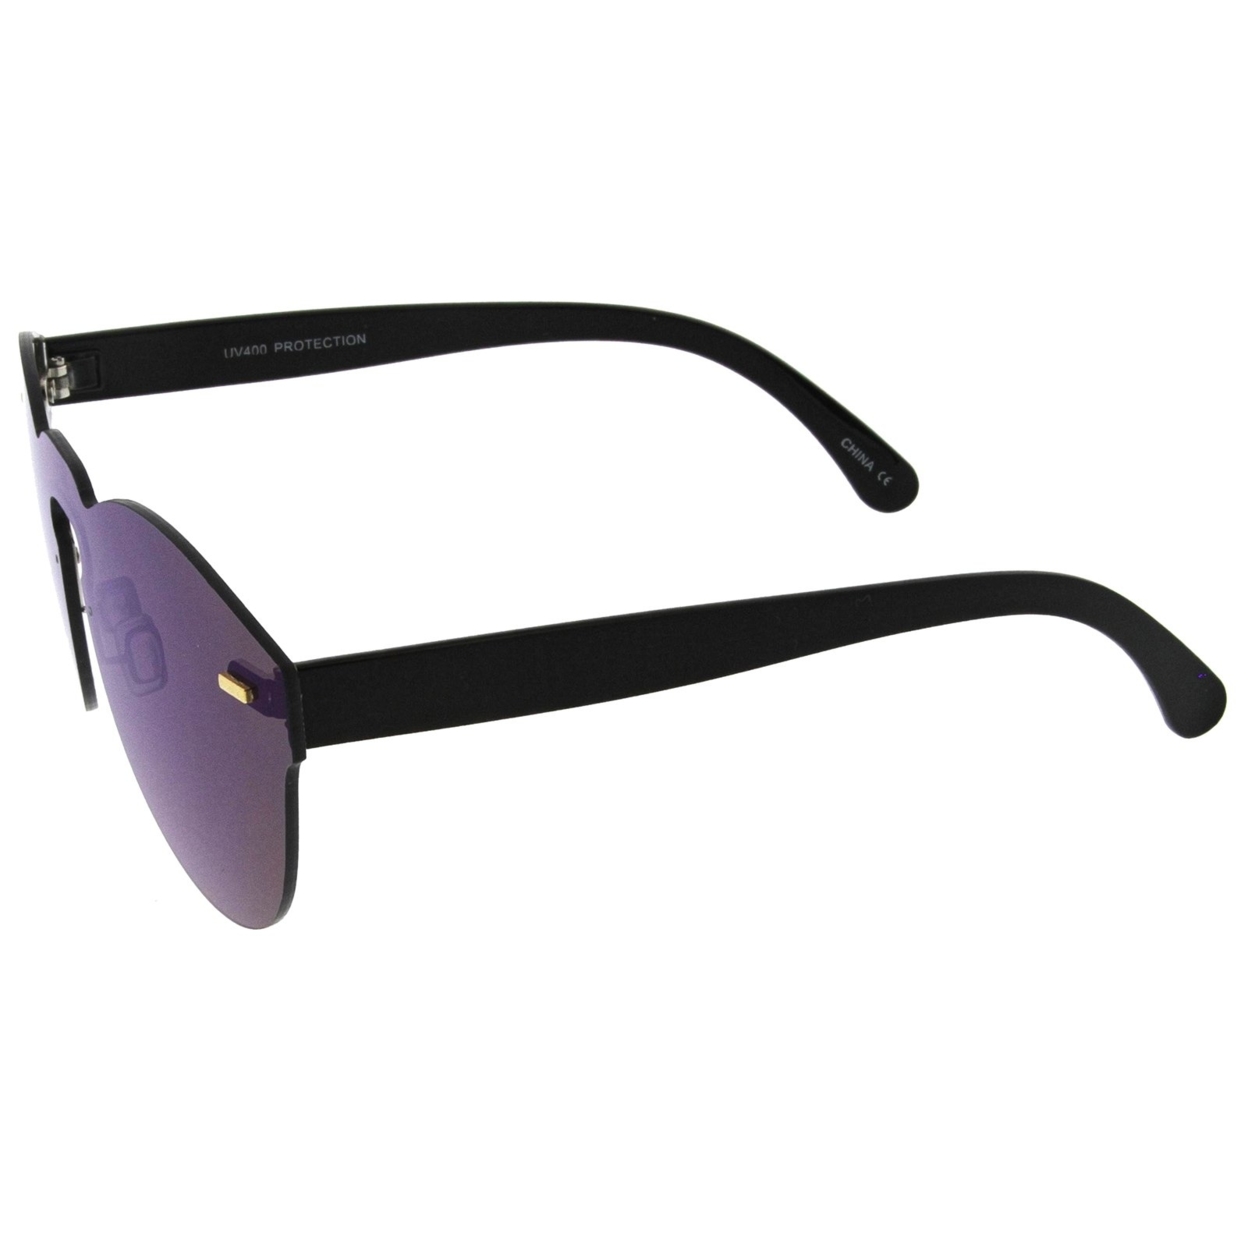 Futuristic Rimless Mono Flat Lens Horn Rimmed Shield Sunglasses 73mm - Black / Gold Mirror